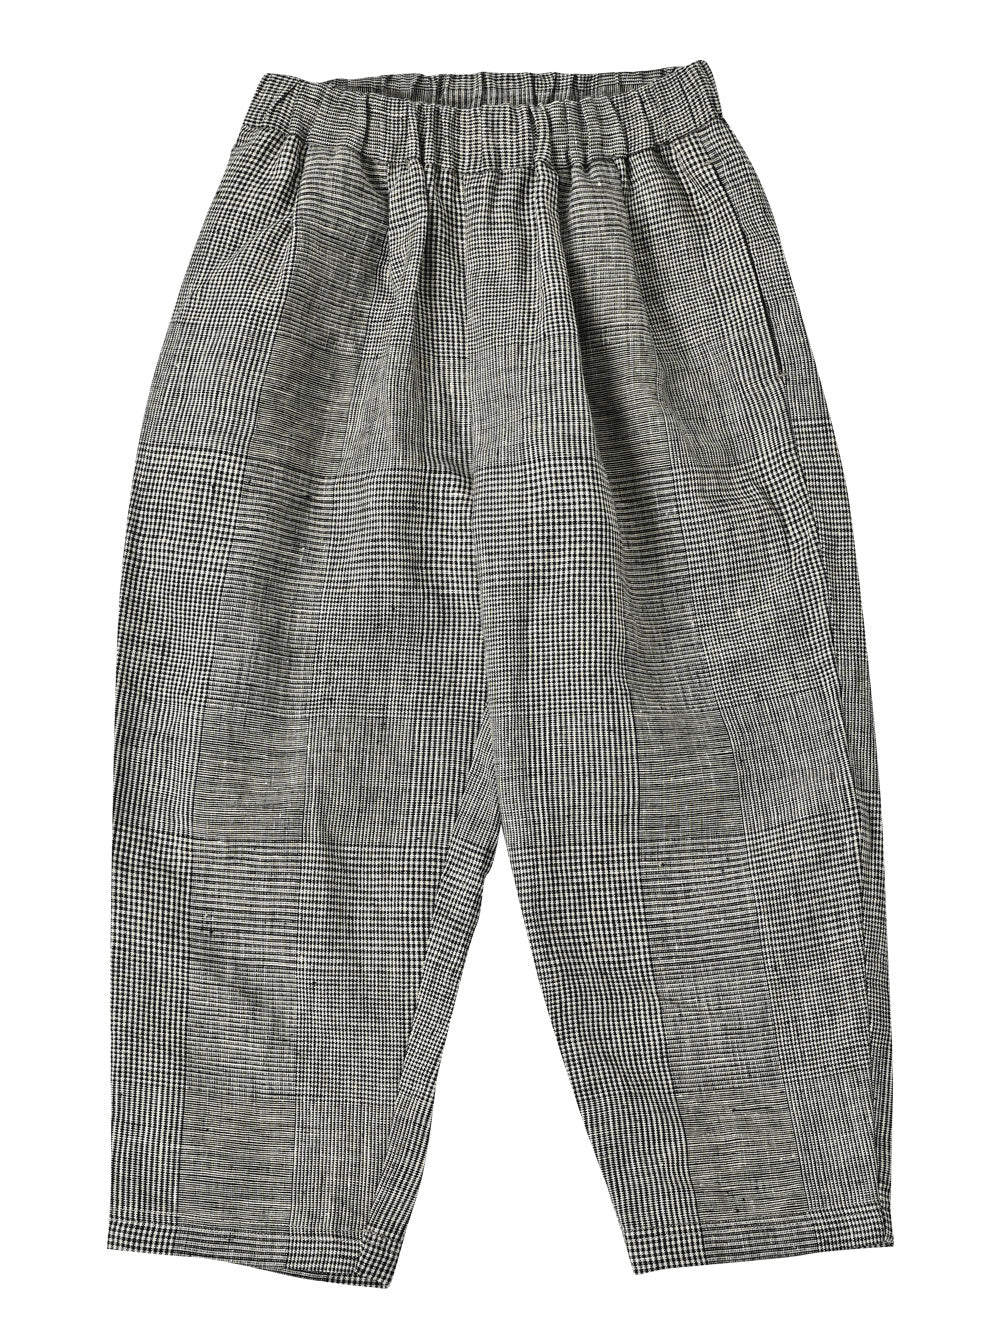 PREORDER: Grey Glencheck  Pants